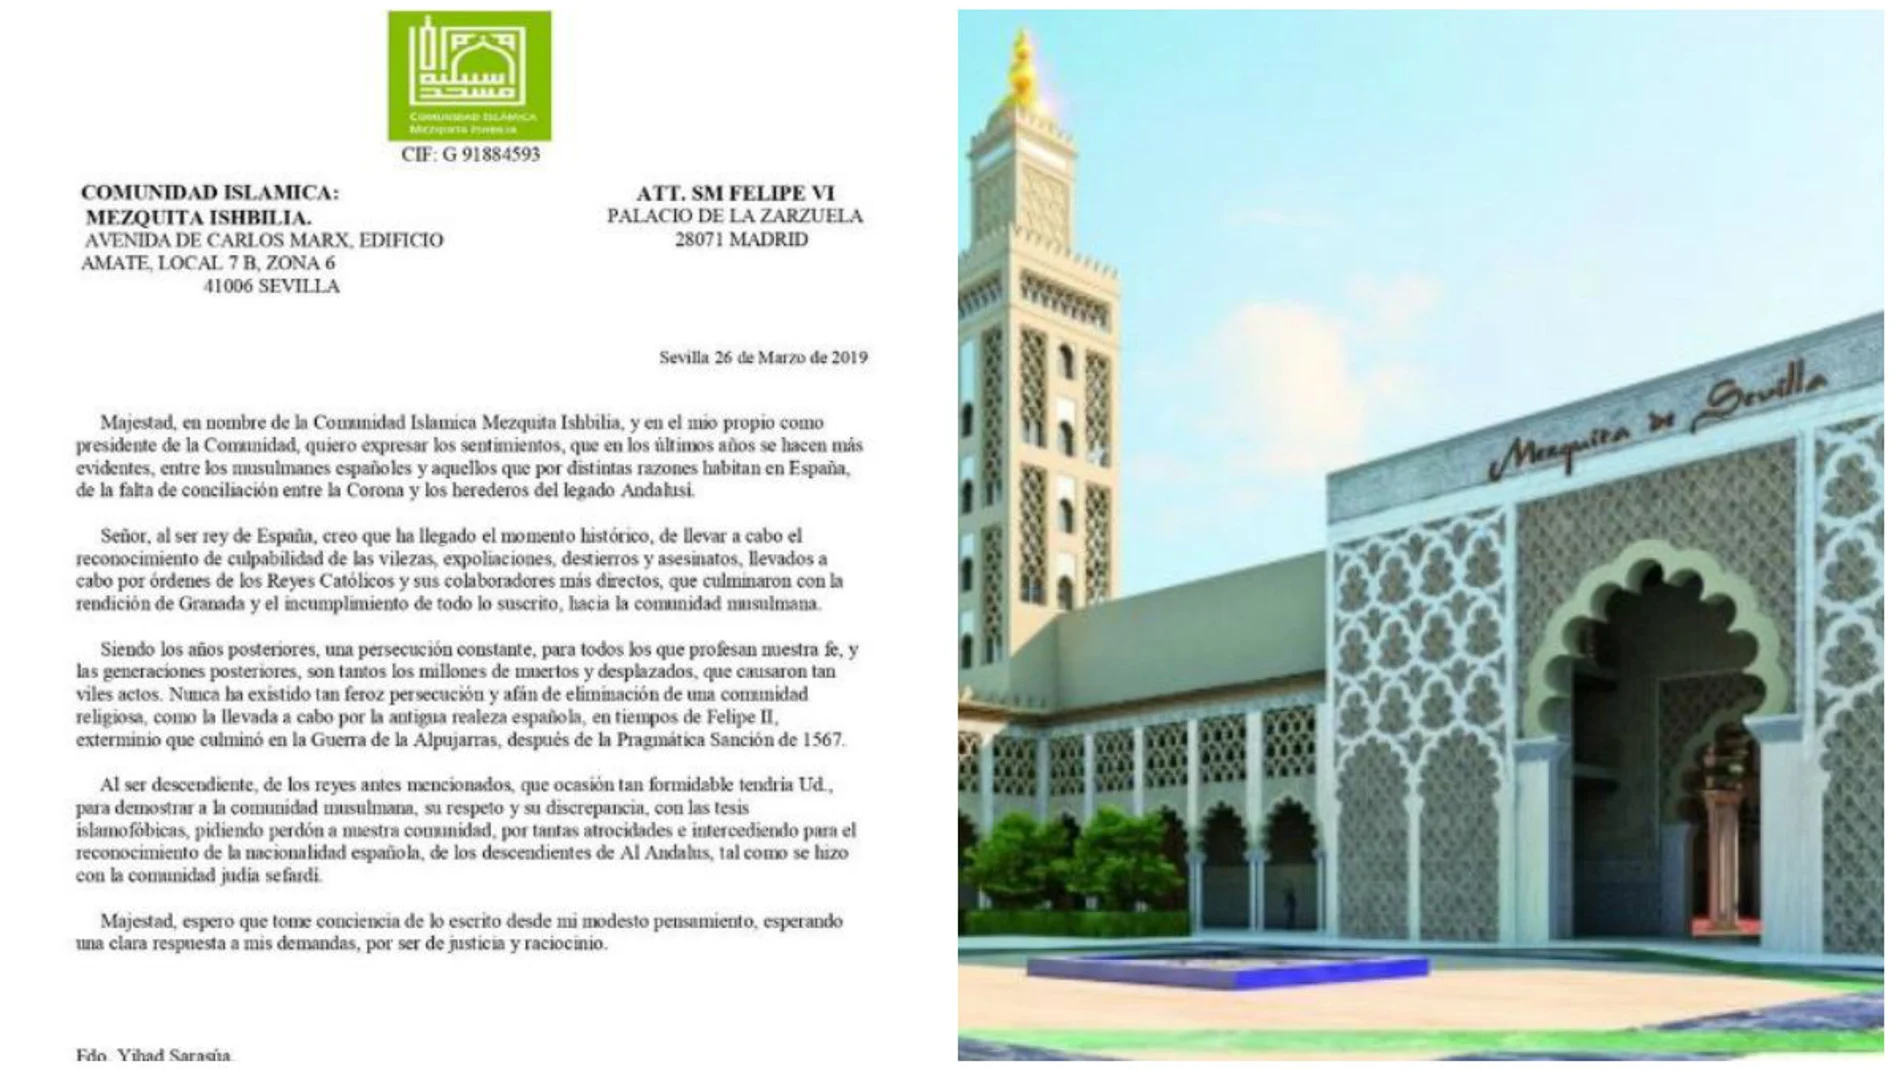 Imagen del Comunicado, junto a la Mezquita Ishbila